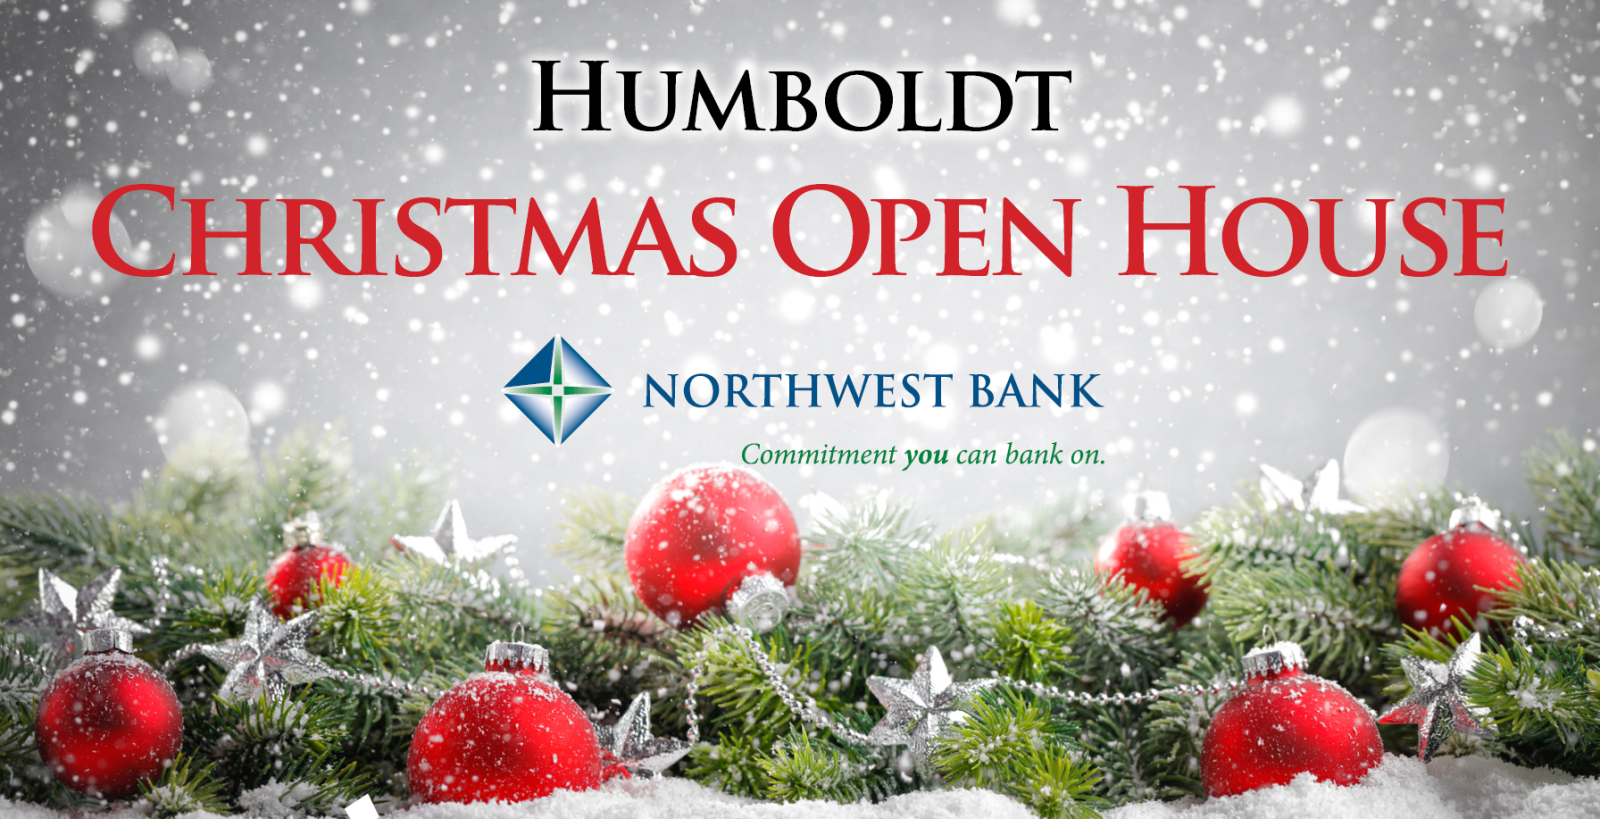 Humboldt Christmas Open House